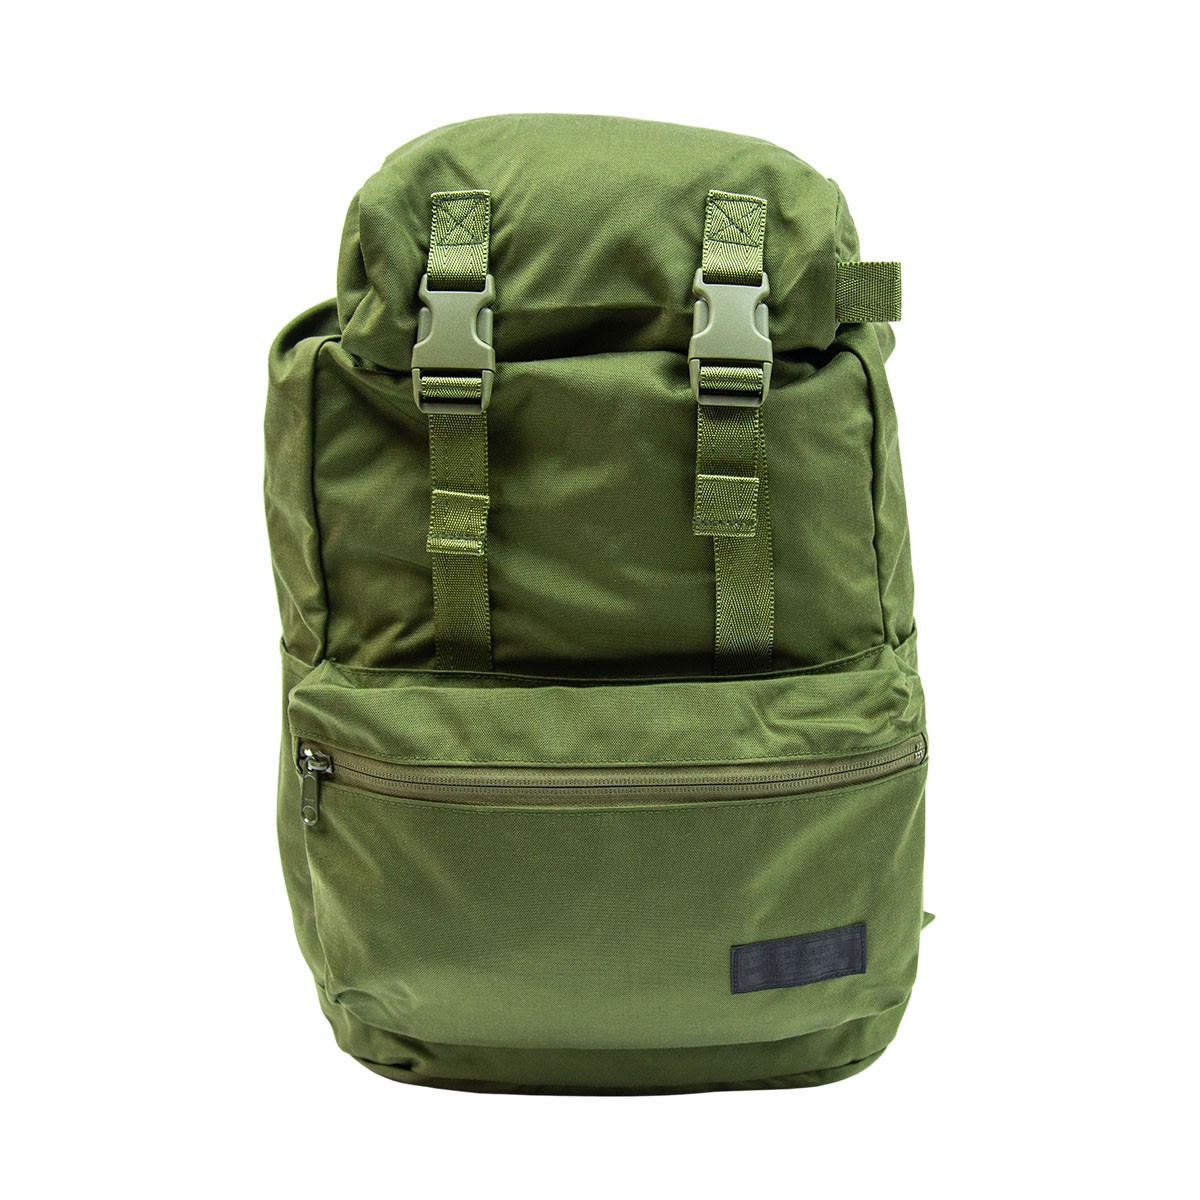 <荃灣店>Wilderness Experience 日本製造 Day Trip Backpack 超輕背囊 雙肩背包 Olive 